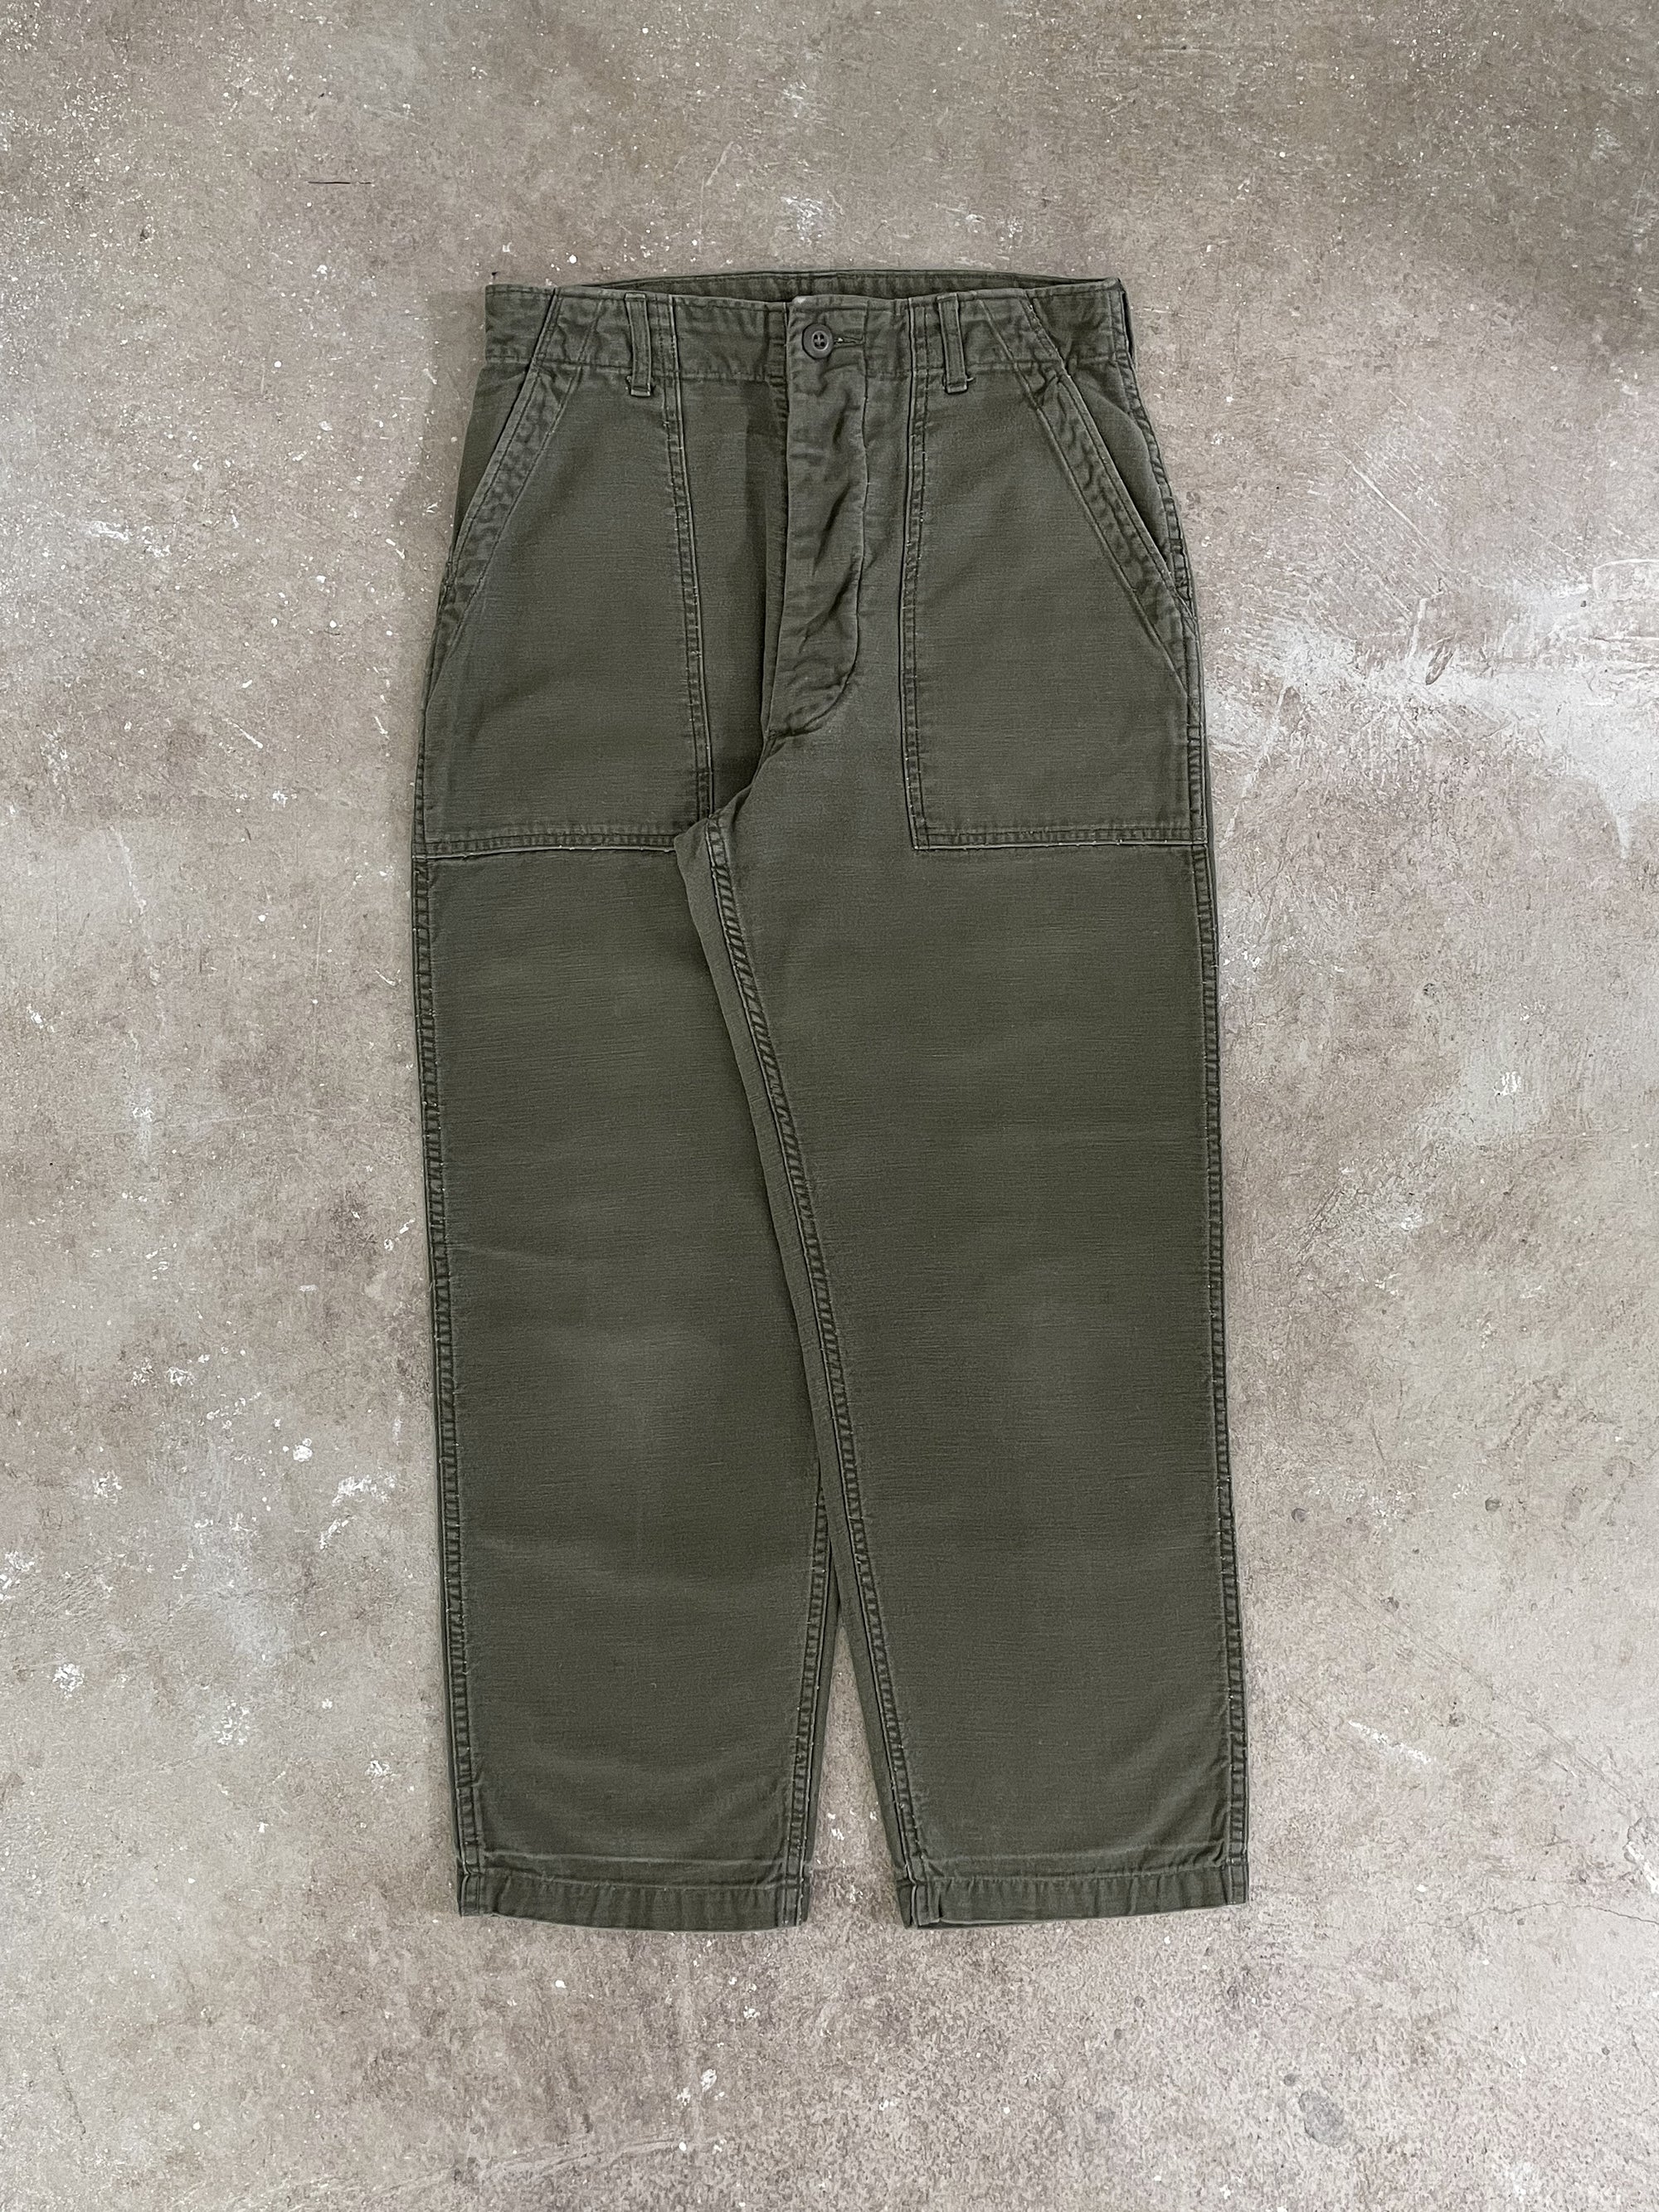 1970s OG-107 Faded Military Fatigue Pants (28X26)